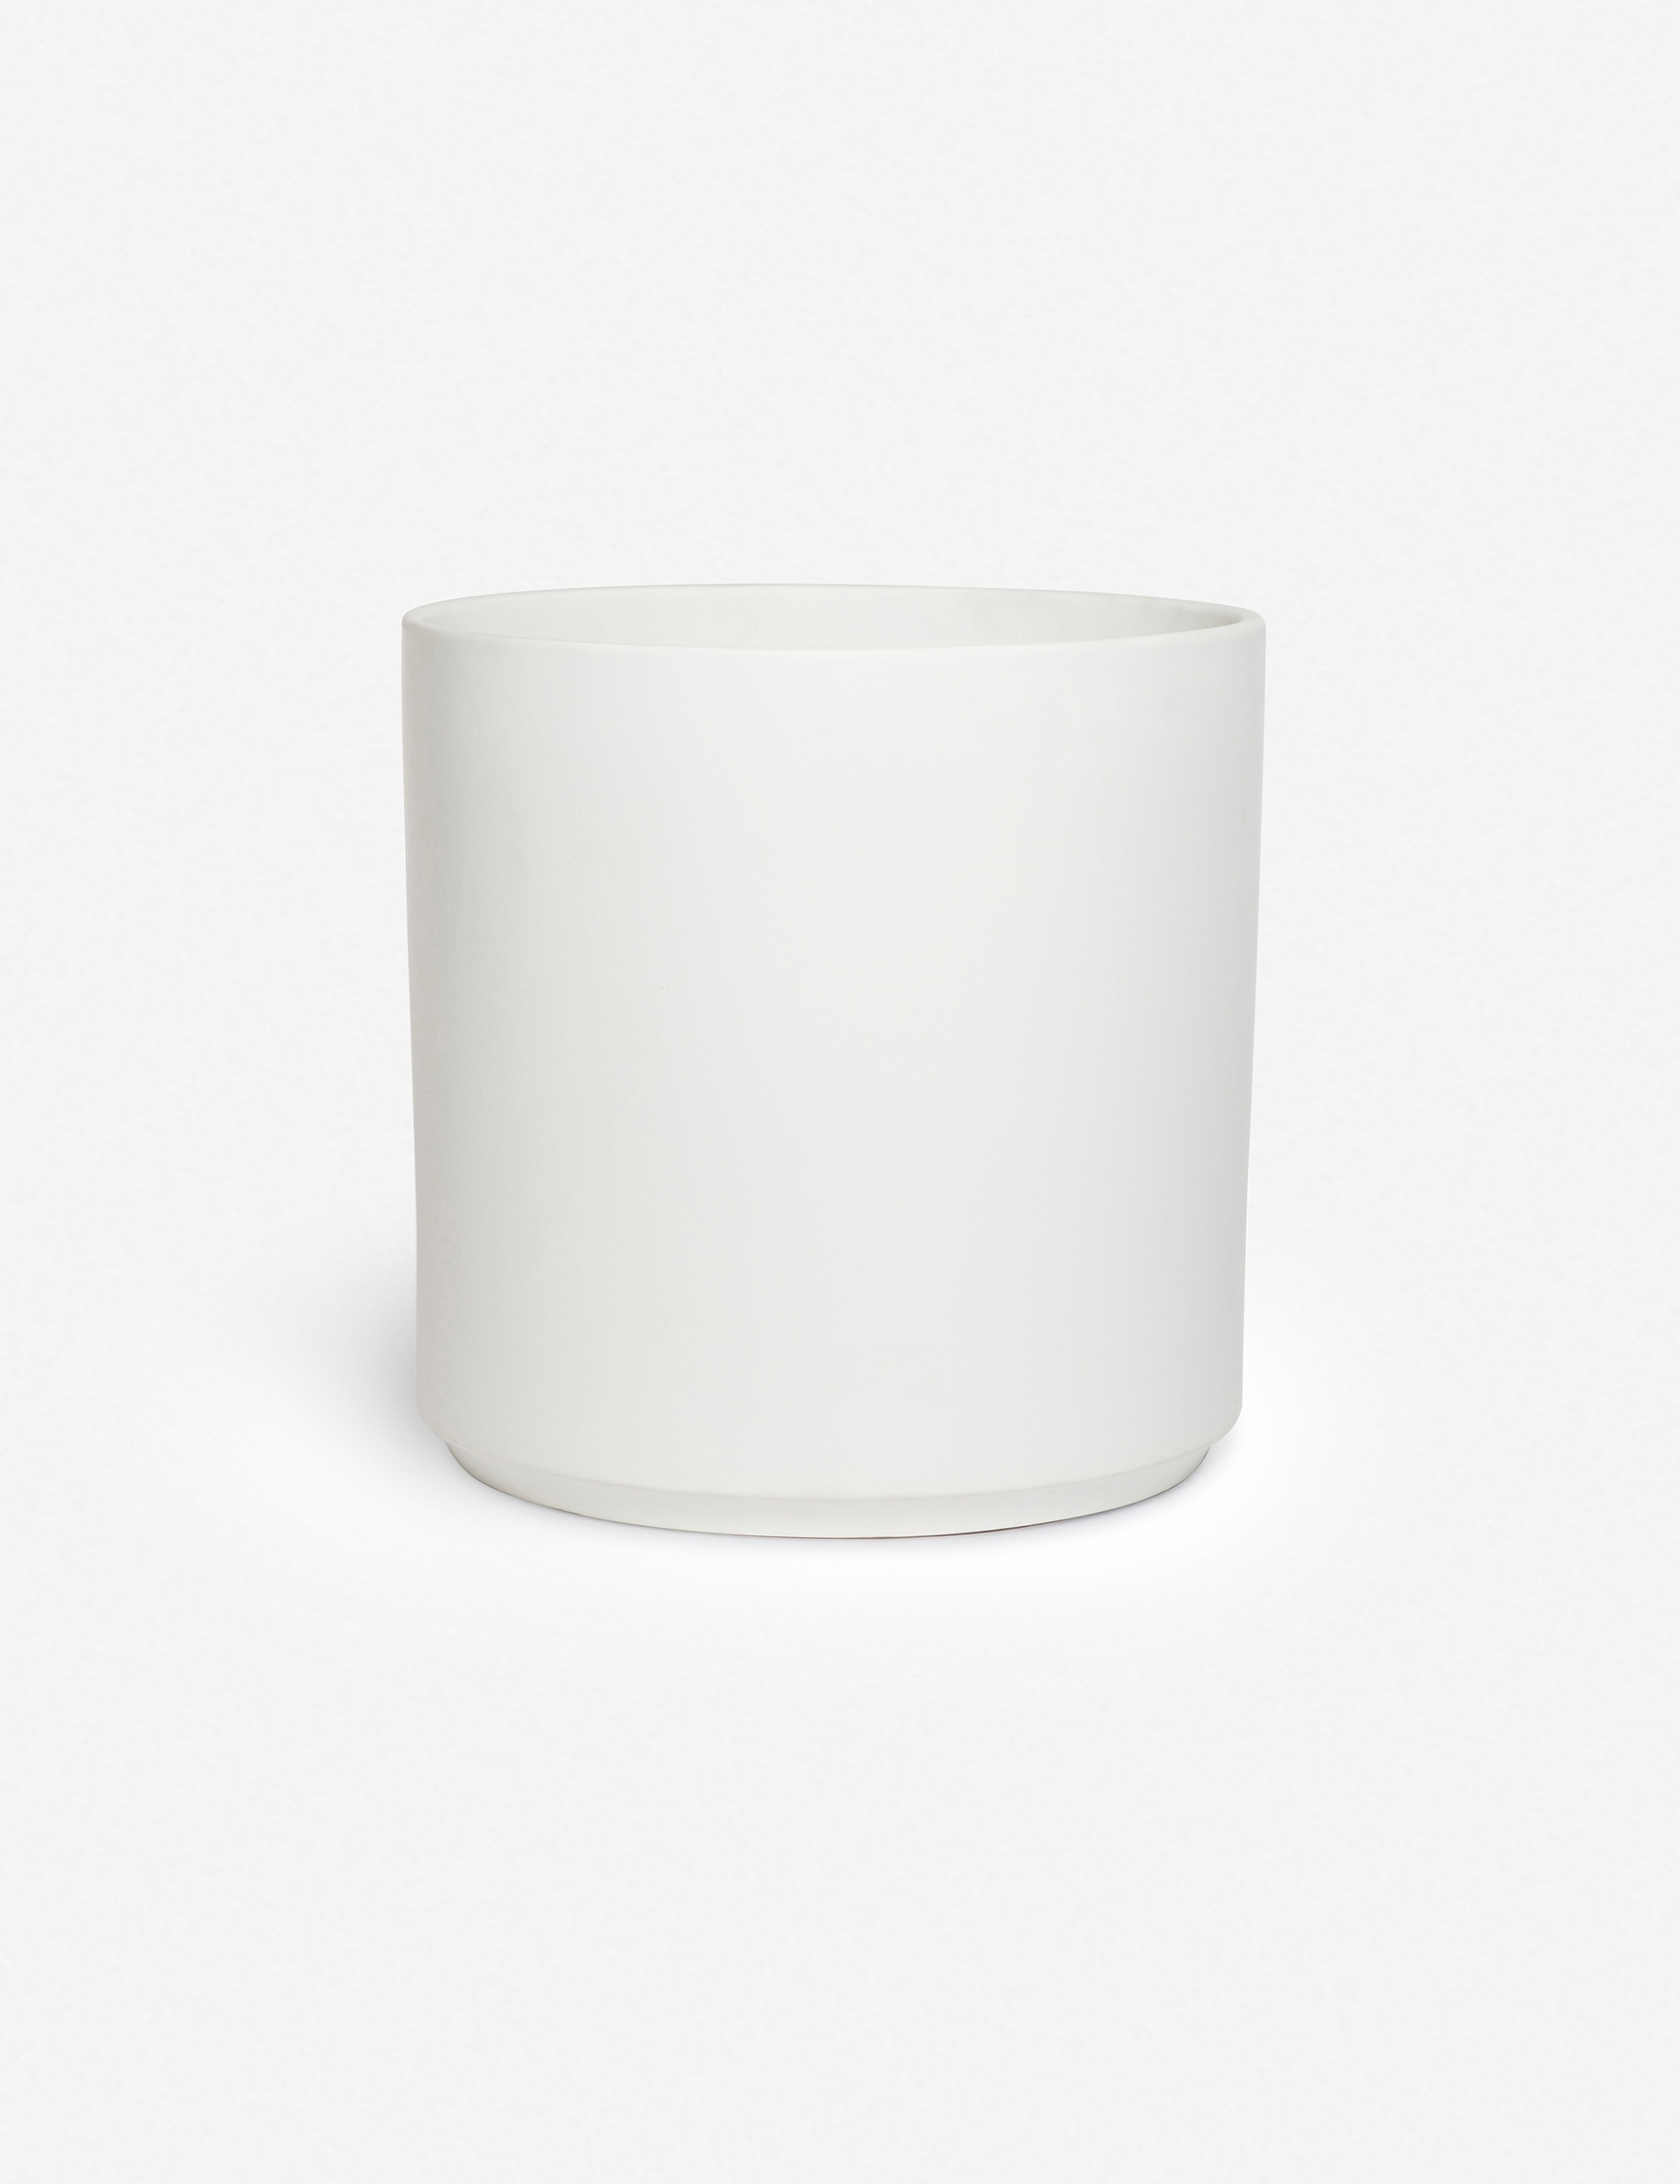 LBE Design Ceramic Planter, White 10"Dia x 9"H - with stand - Image 3